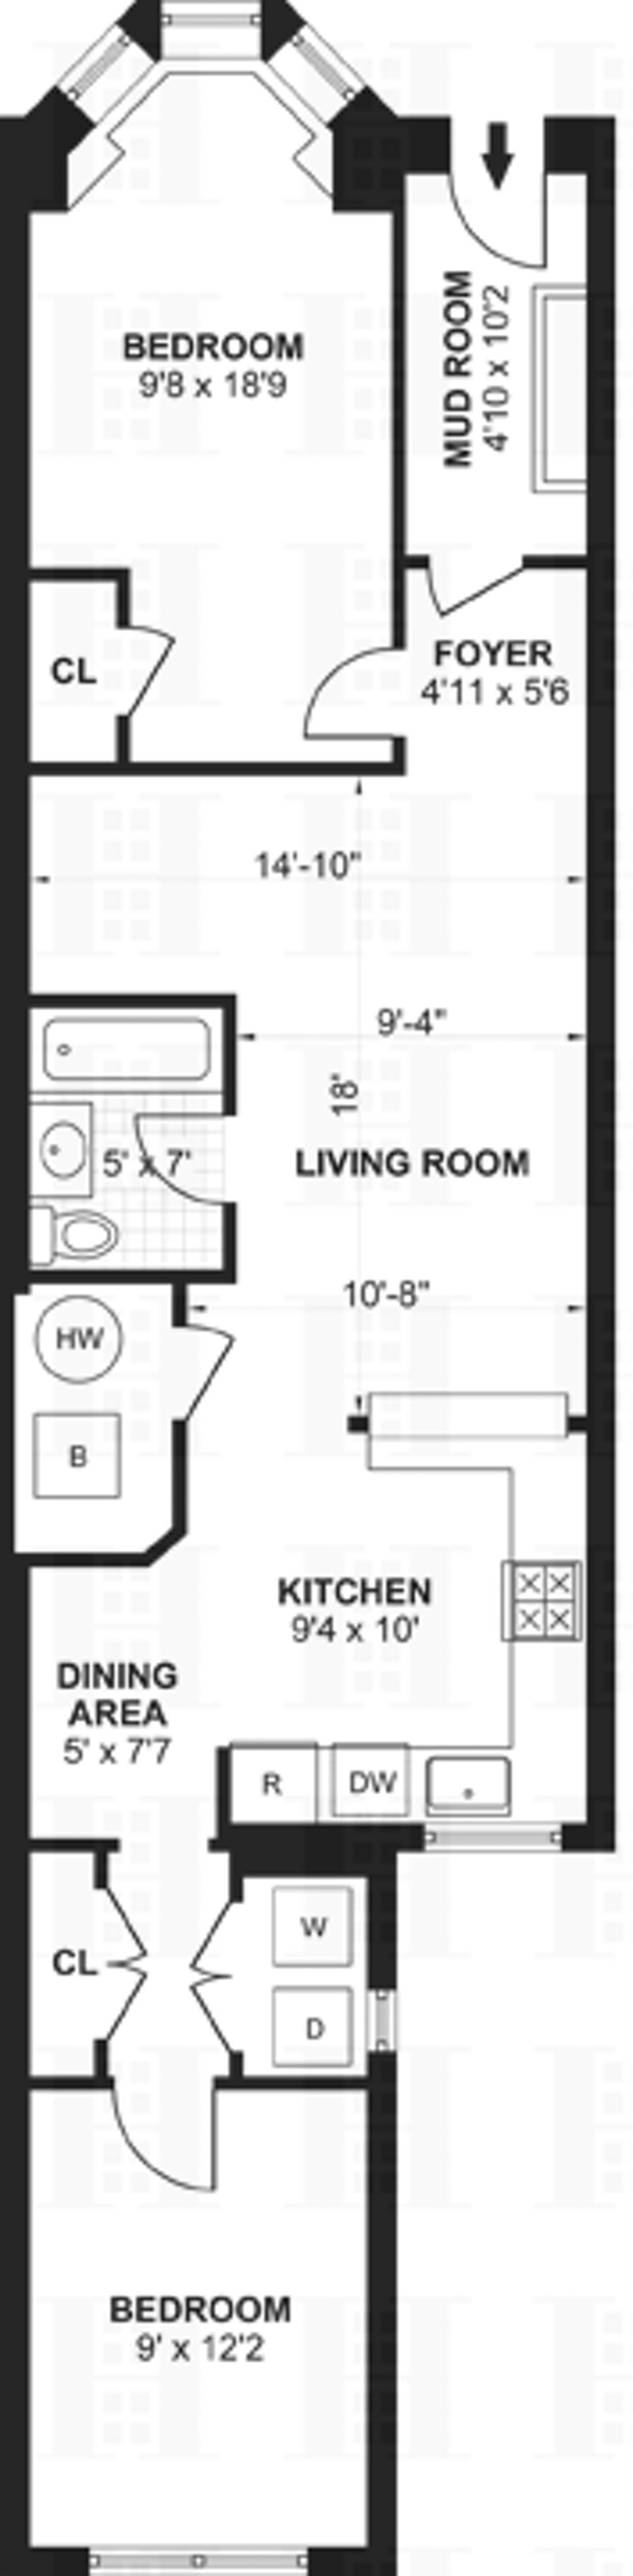 Floorplan for 585 Fourth Street, 1